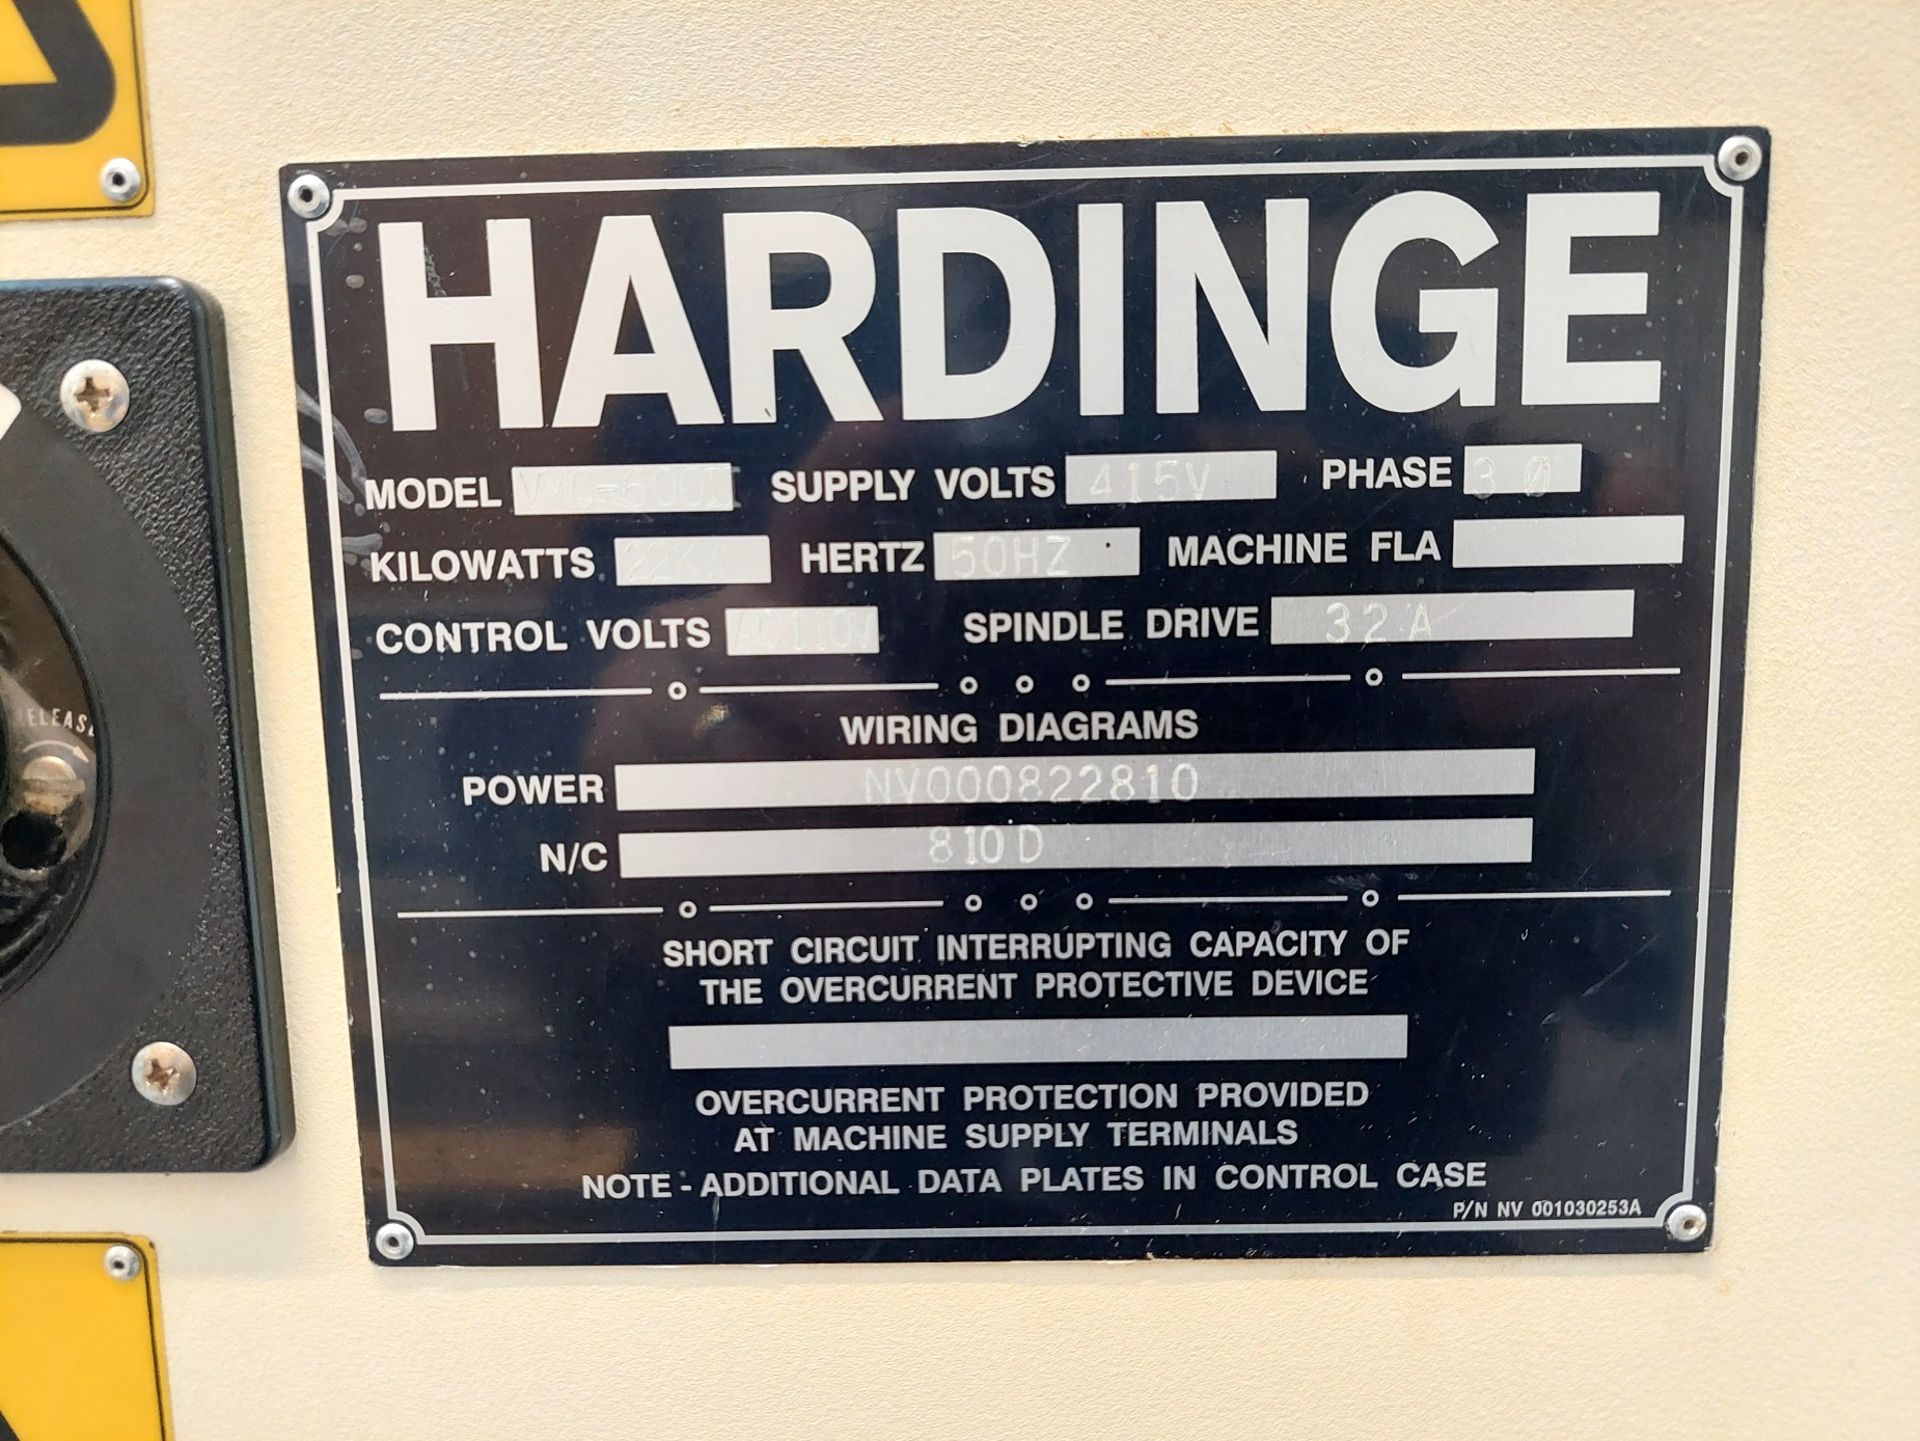 Hardinge VMC 600 II Vertical Machining Centre - Image 5 of 6